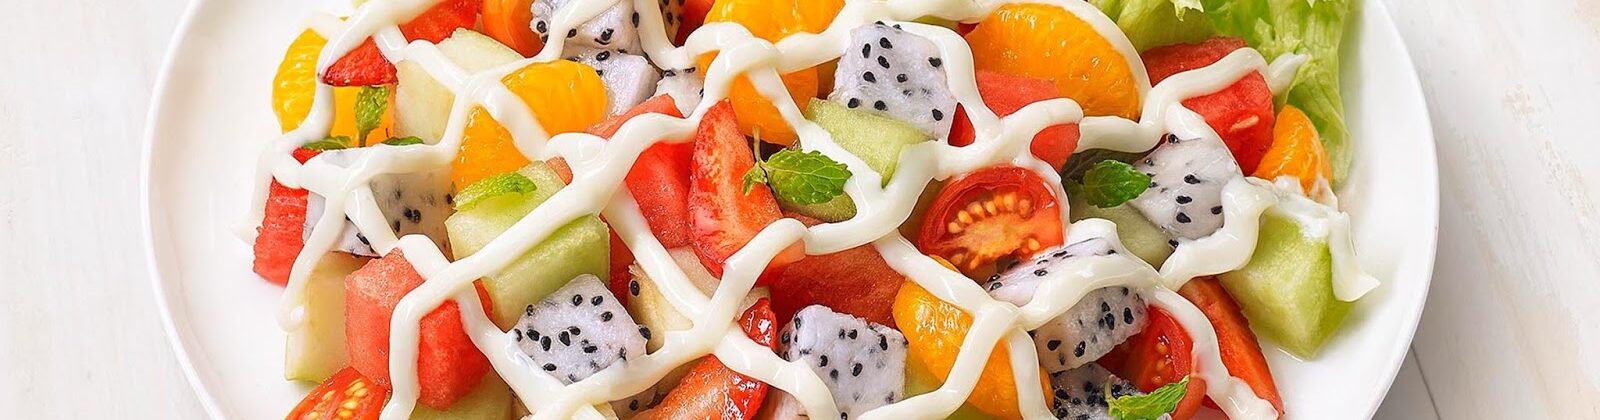 resep salad buah sederhana tanpa yogurt